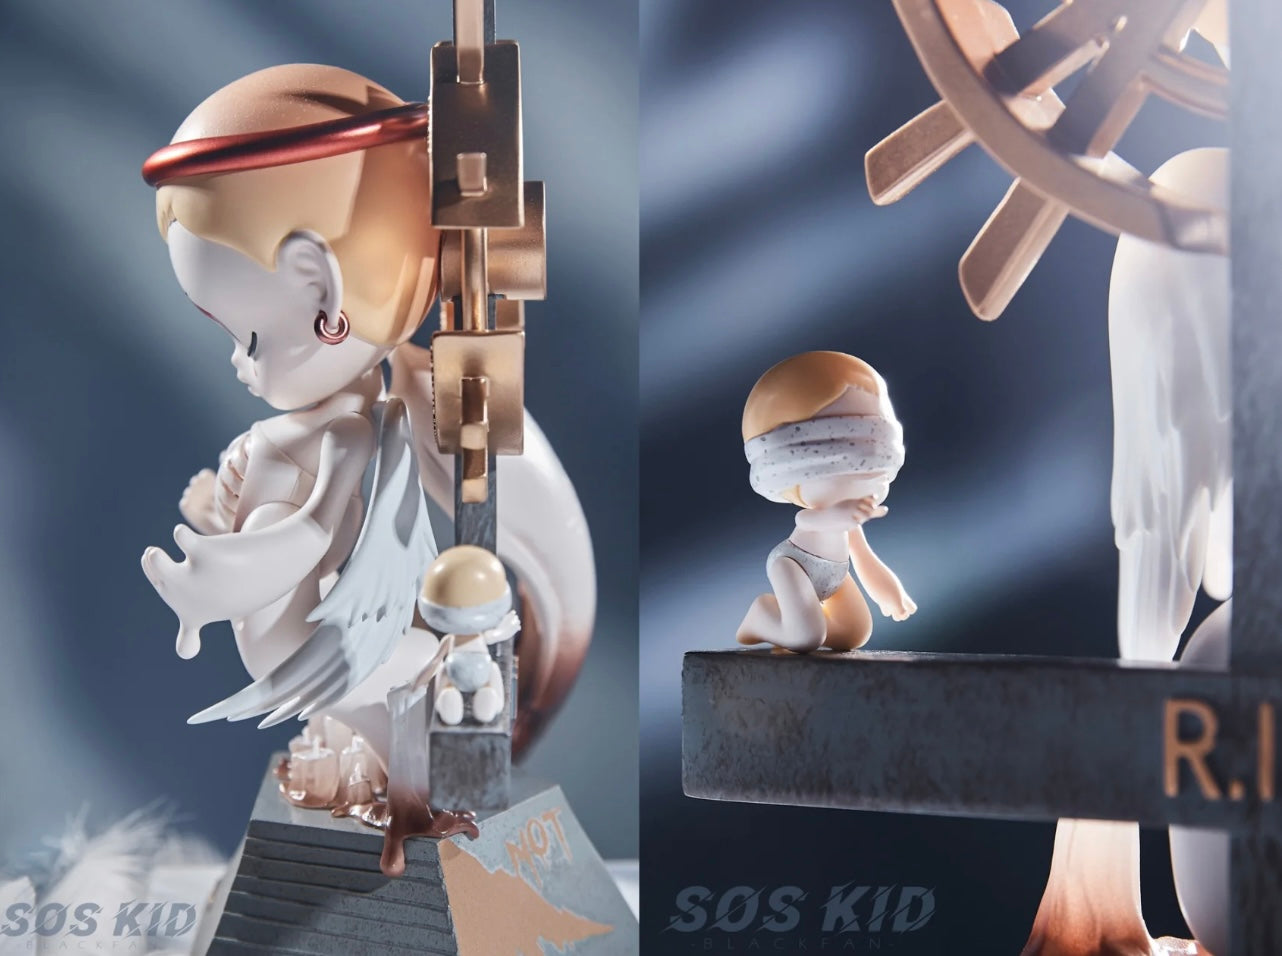 [FUNFORFUN] SOS KID - "Angel" Art Toy